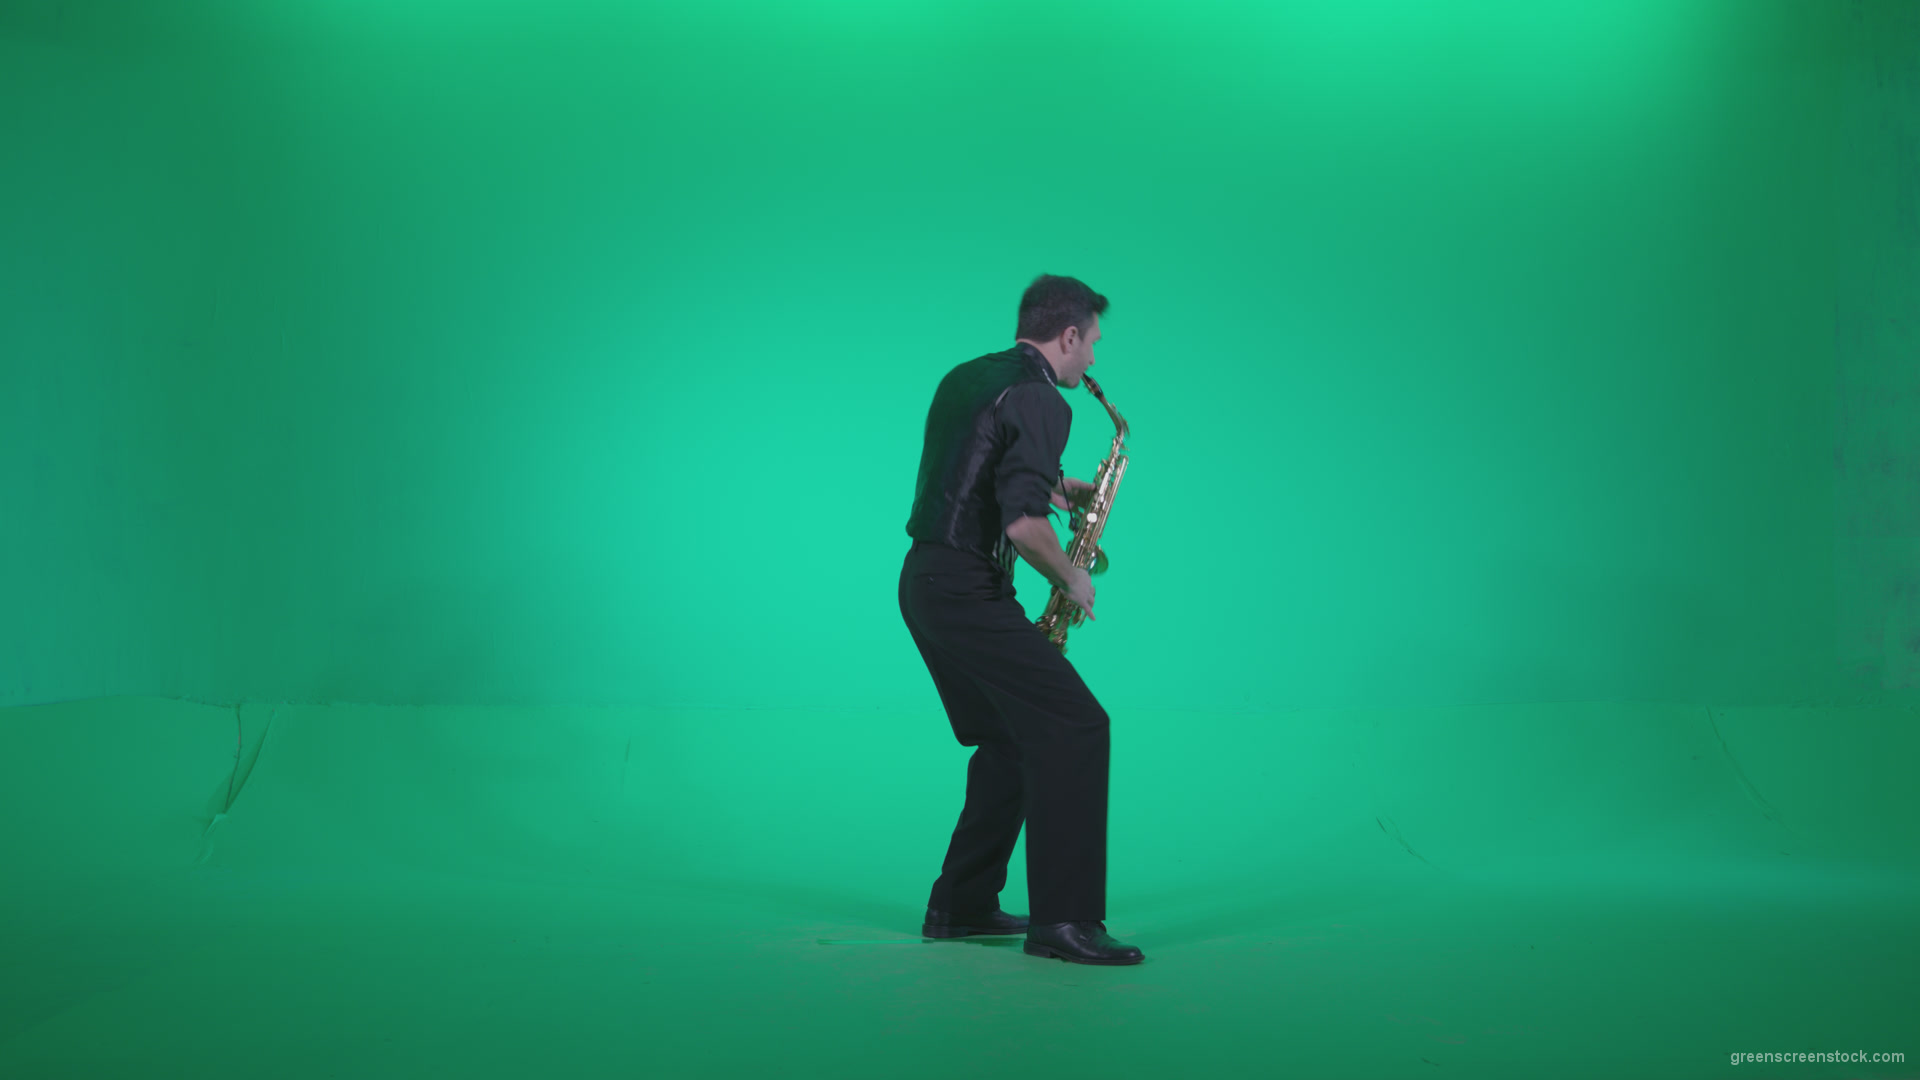 Saxophone-Virtuoso-Performer-s9-Green-Screen-Video-Footage_004 Green Screen Stock